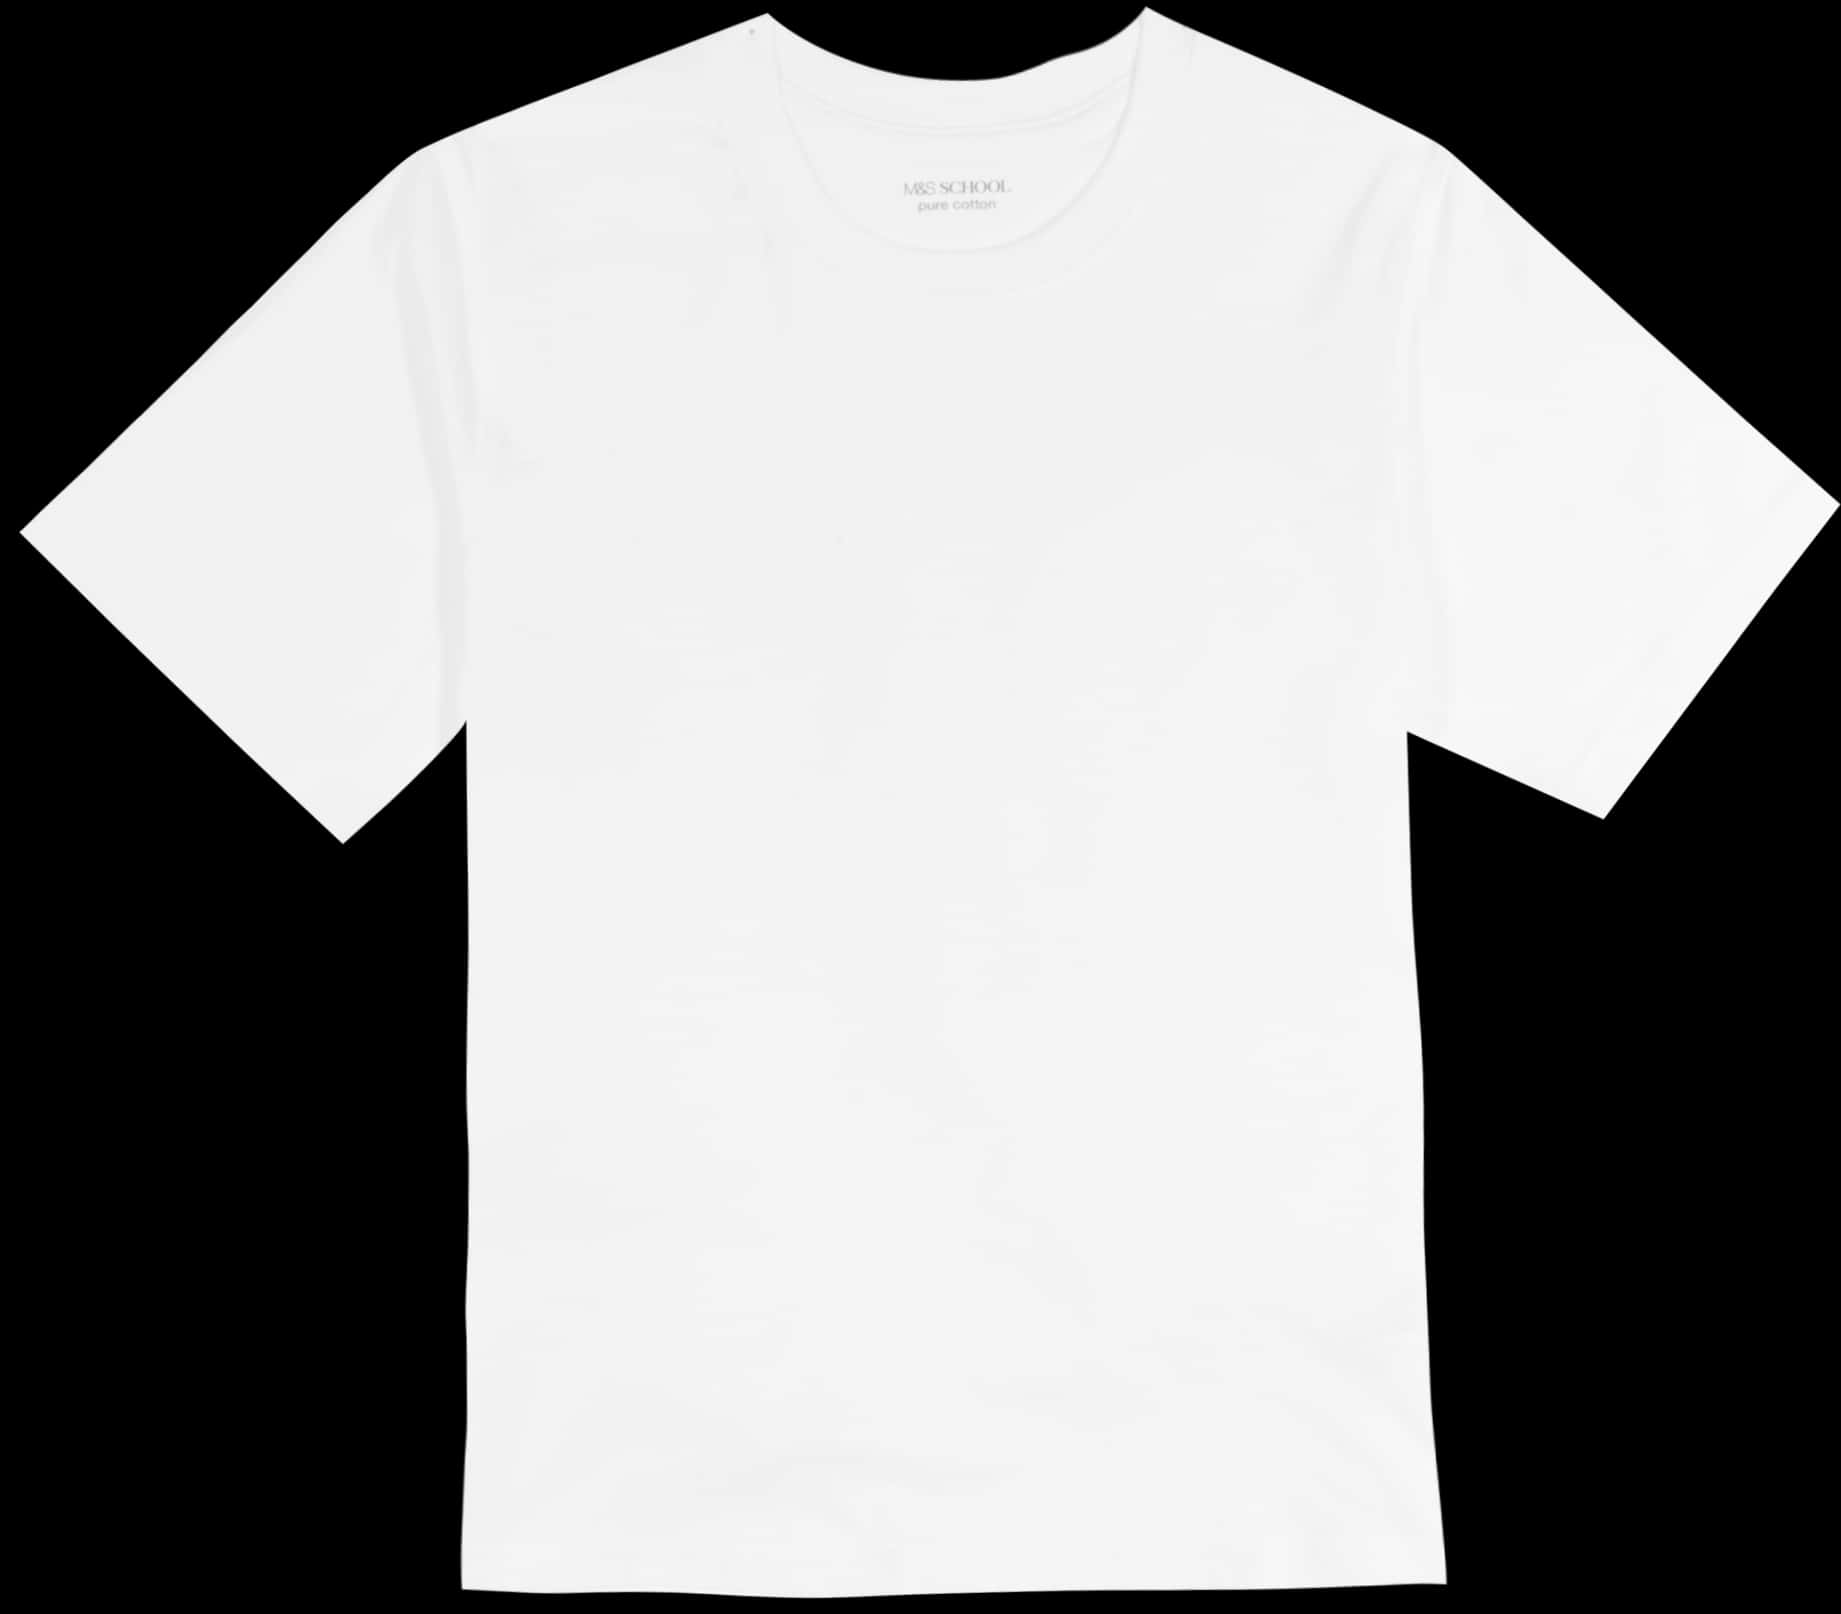 Plain White T Shirt Product Image PNG